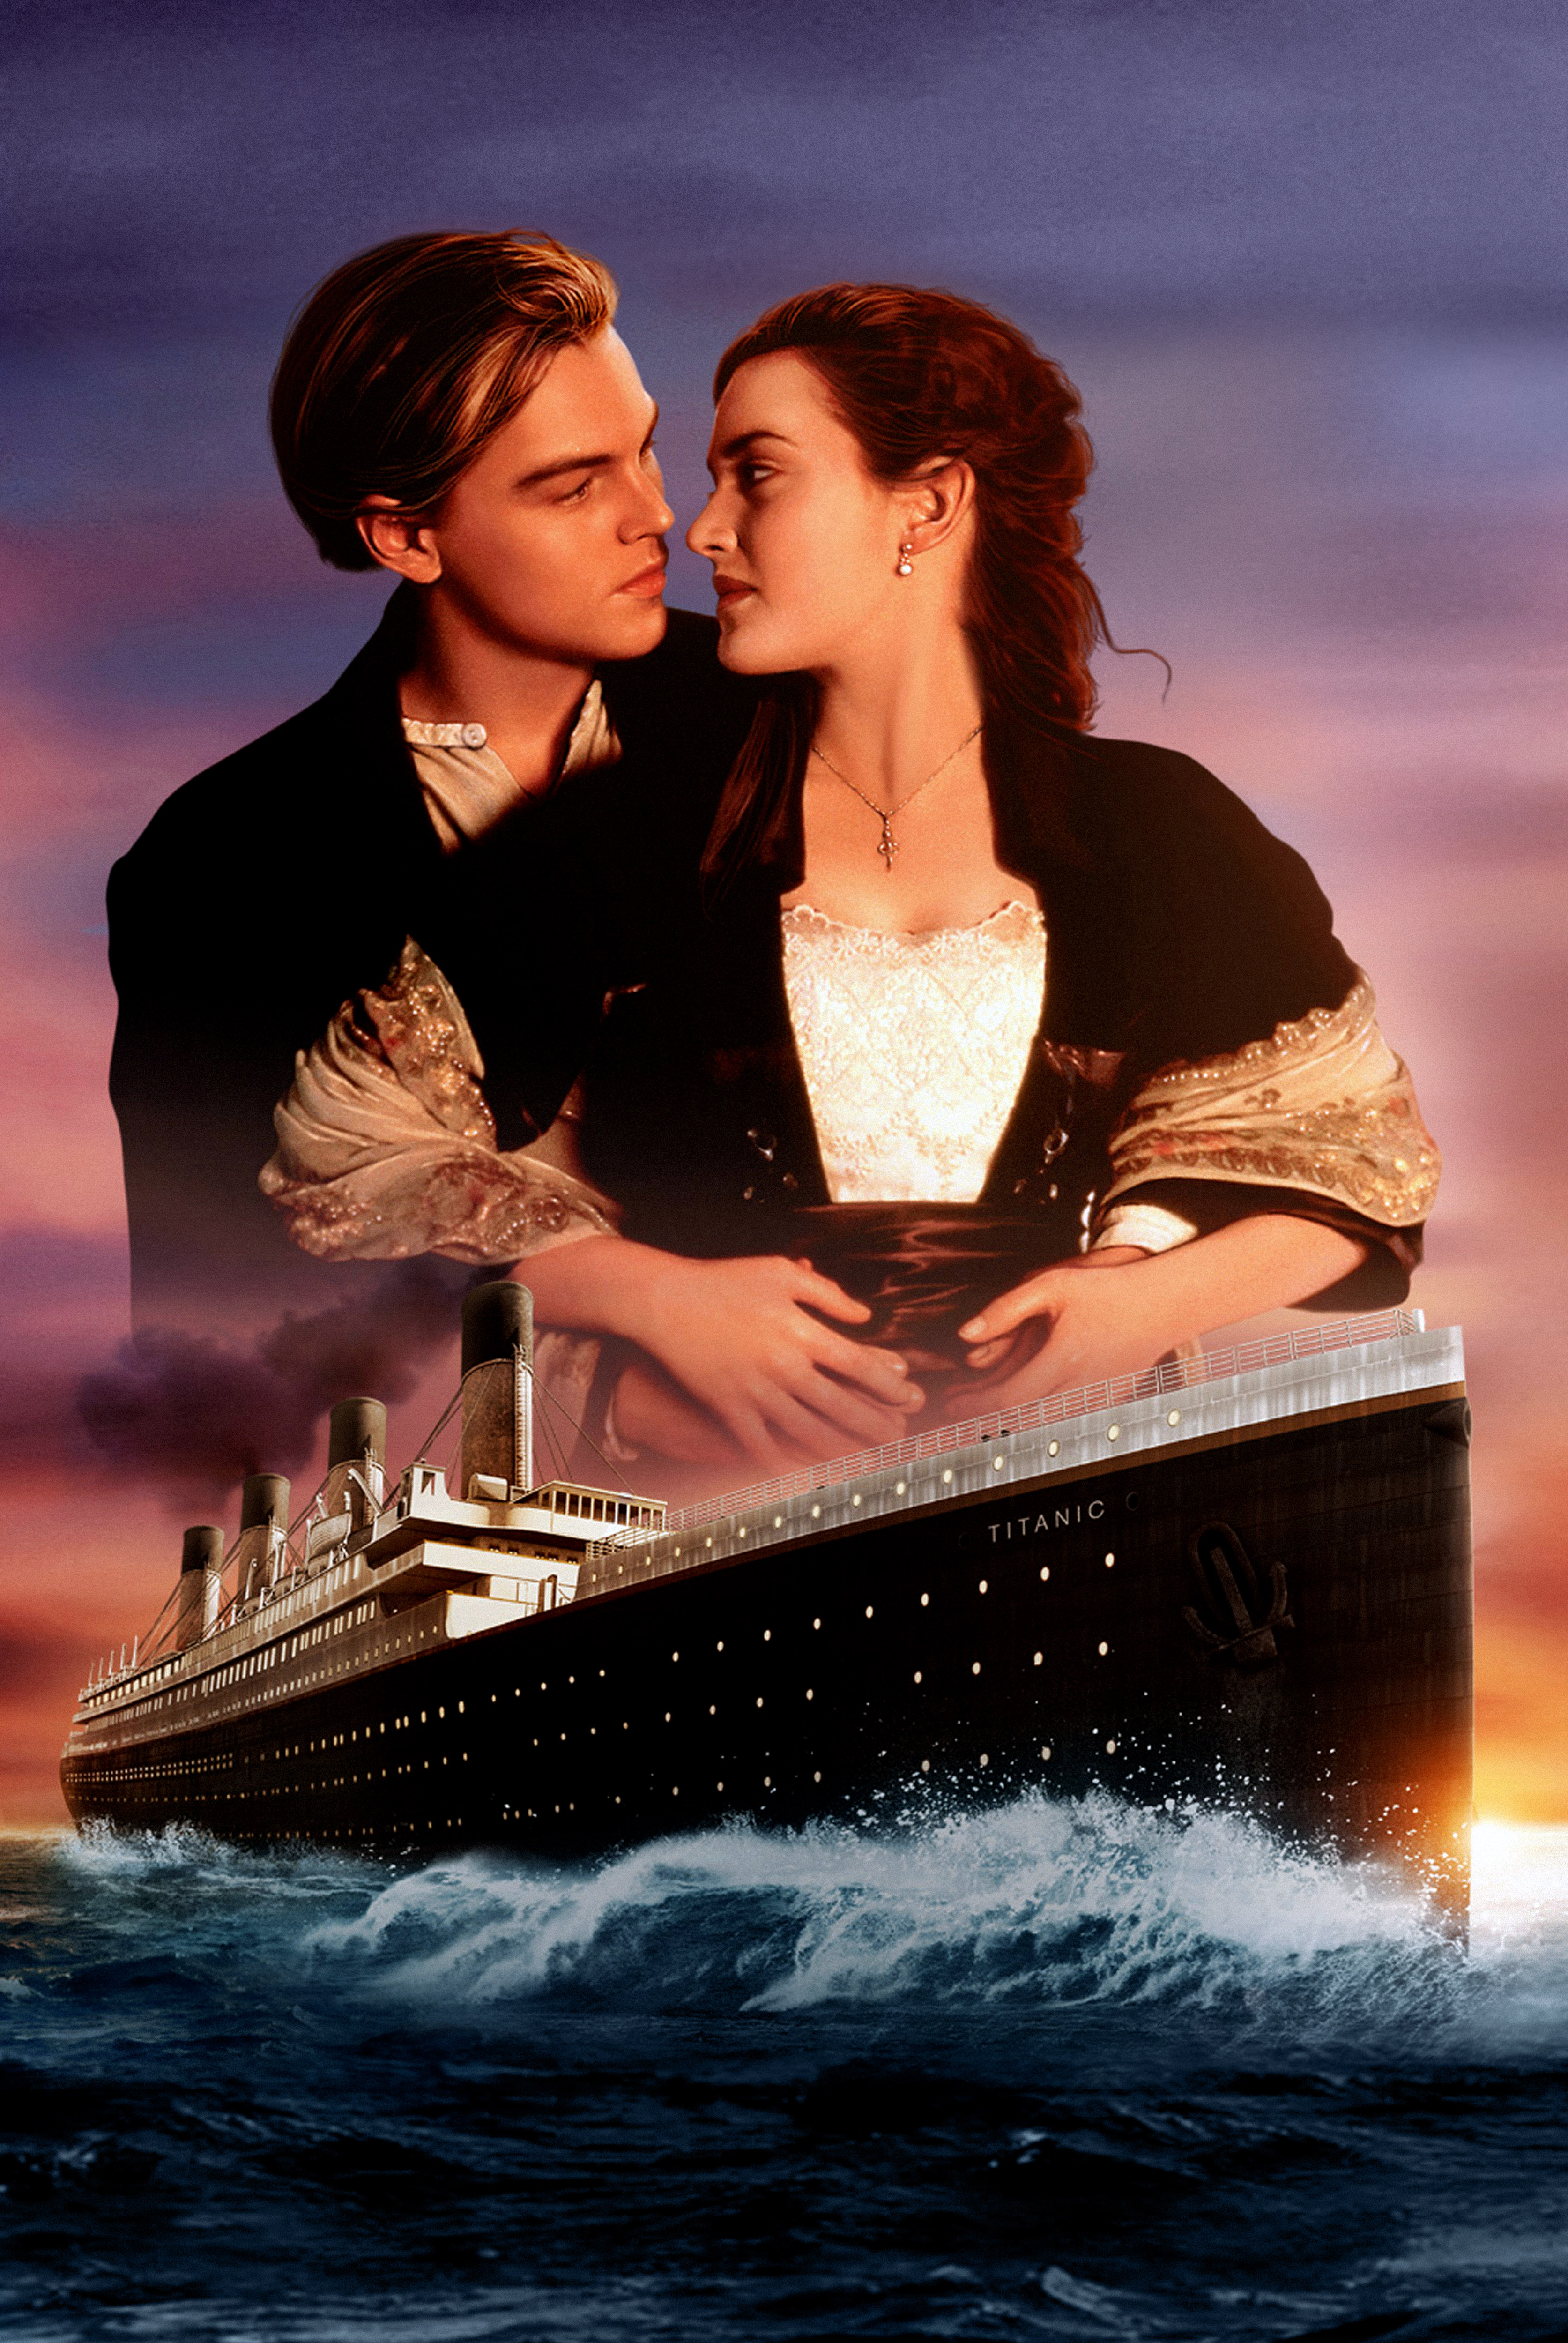 Titanic Poster (HQ Untagged)